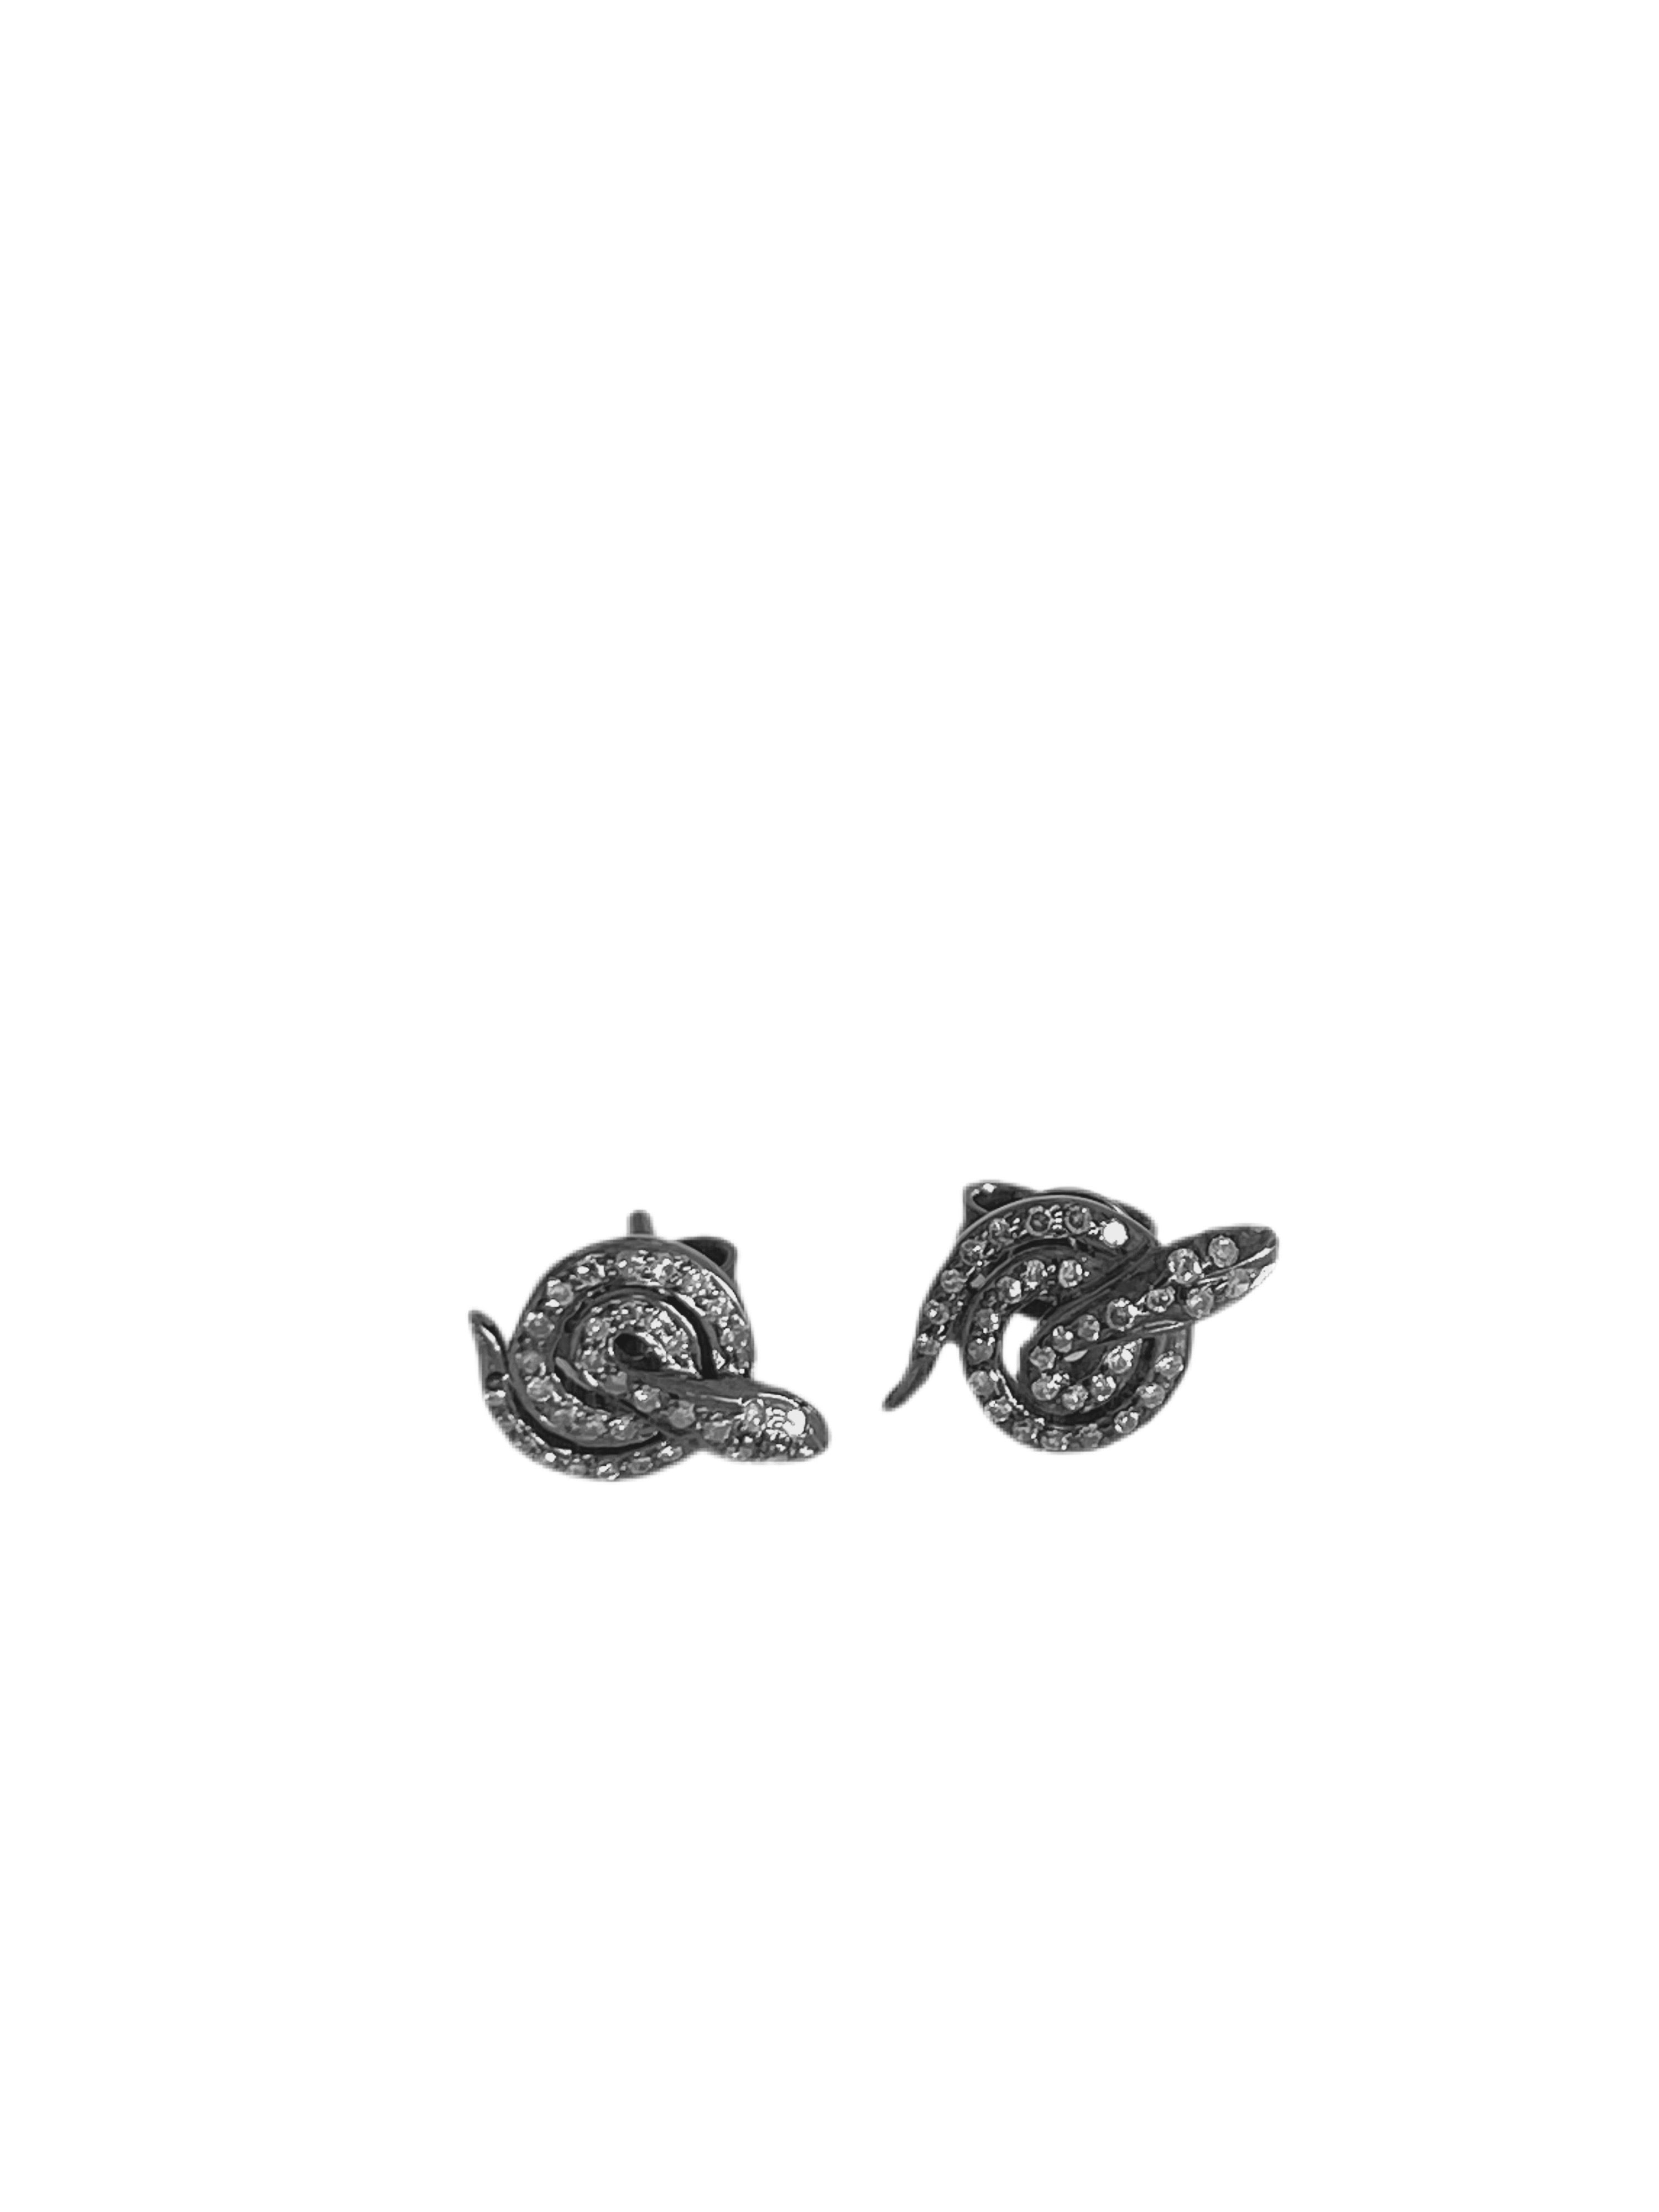 S.Row Designs Small Diamond Snake Post Earring